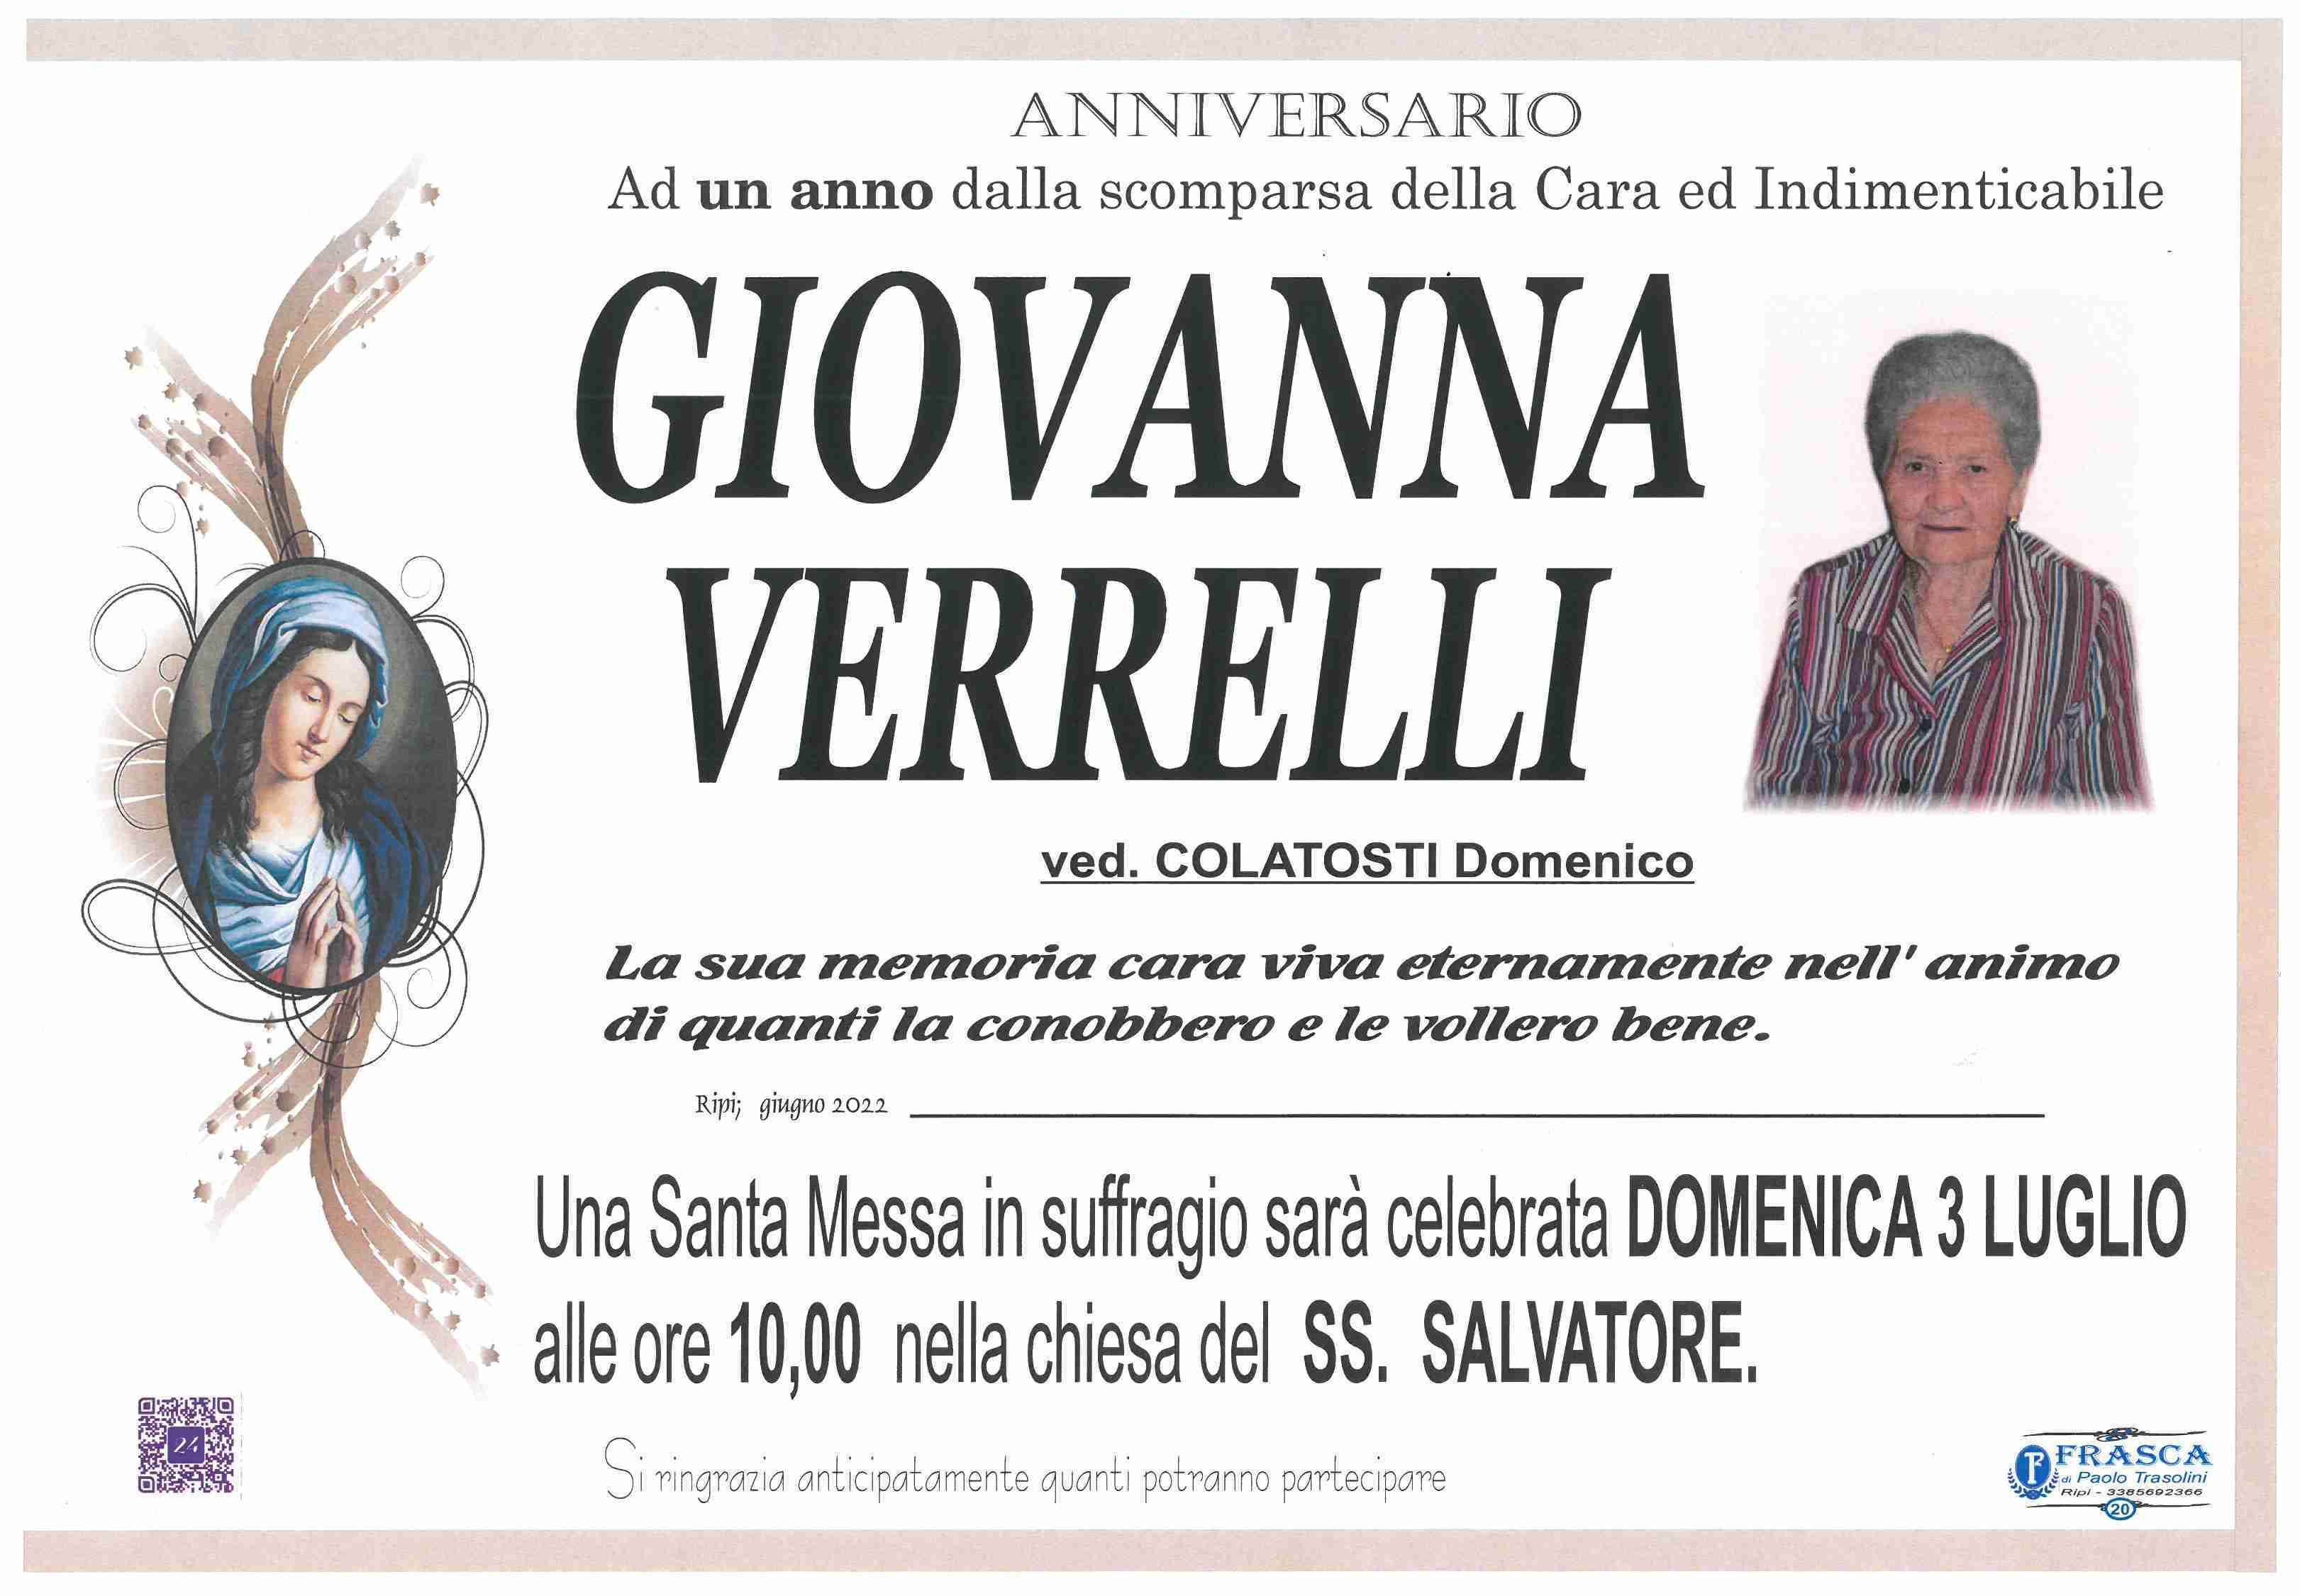 Giovanna Verrelli